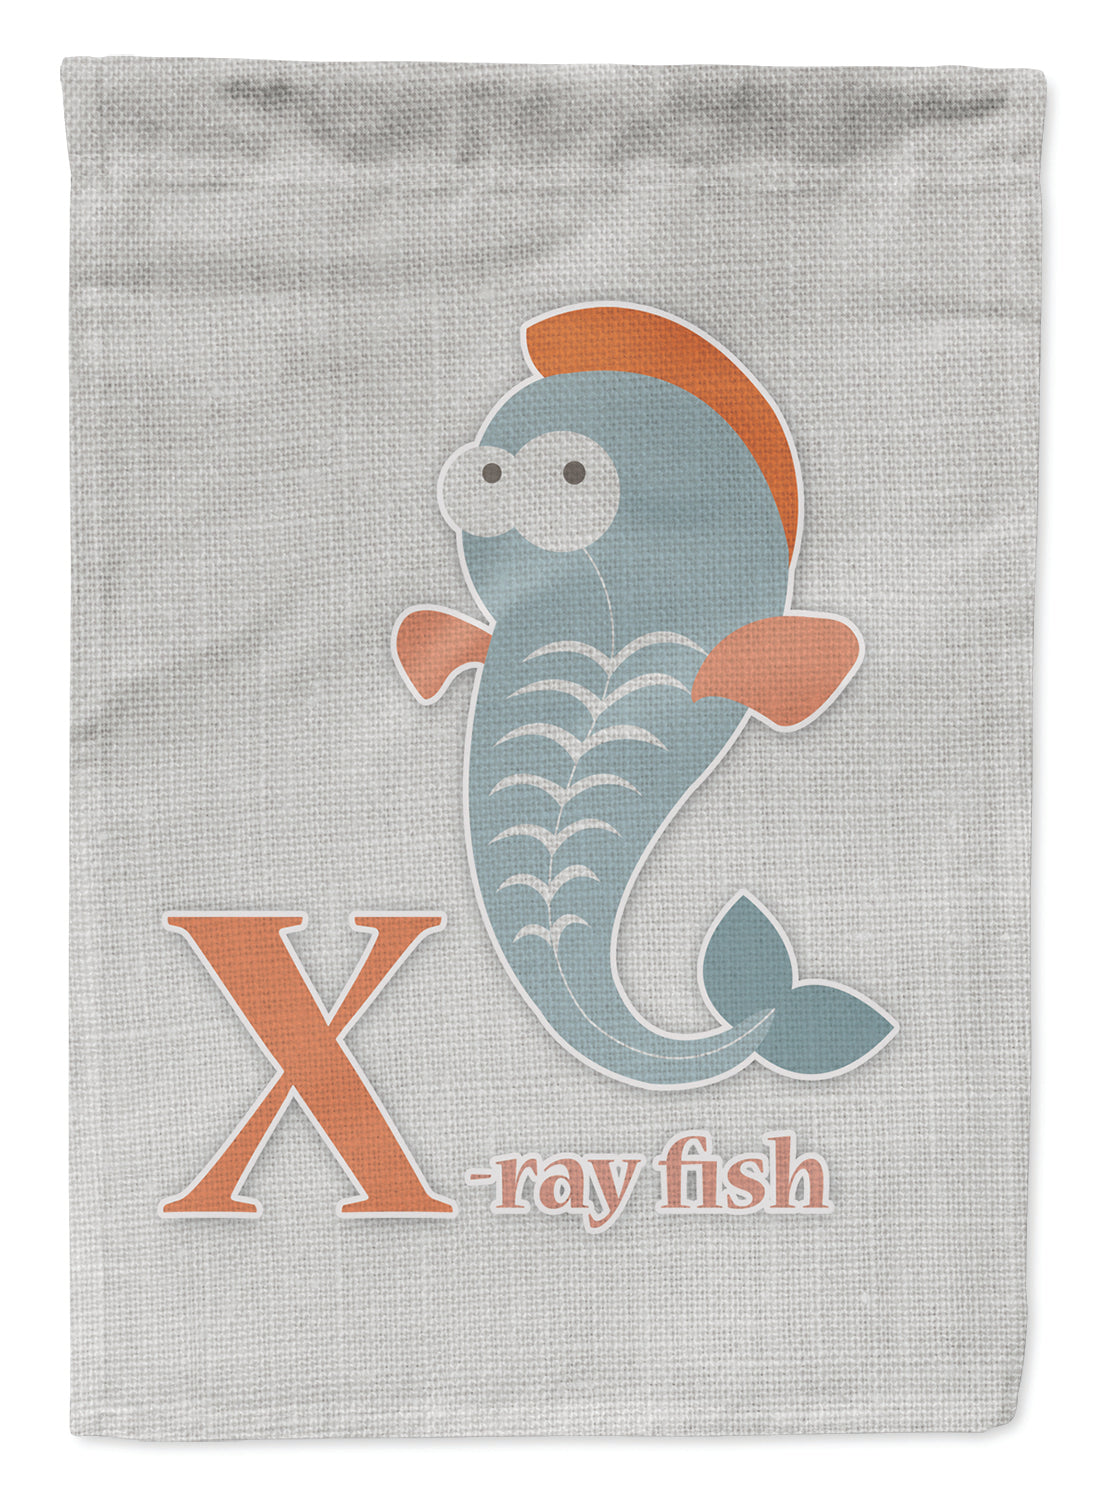 Alphabet X for Xray Fish Flag Garden Size BB5749GF  the-store.com.